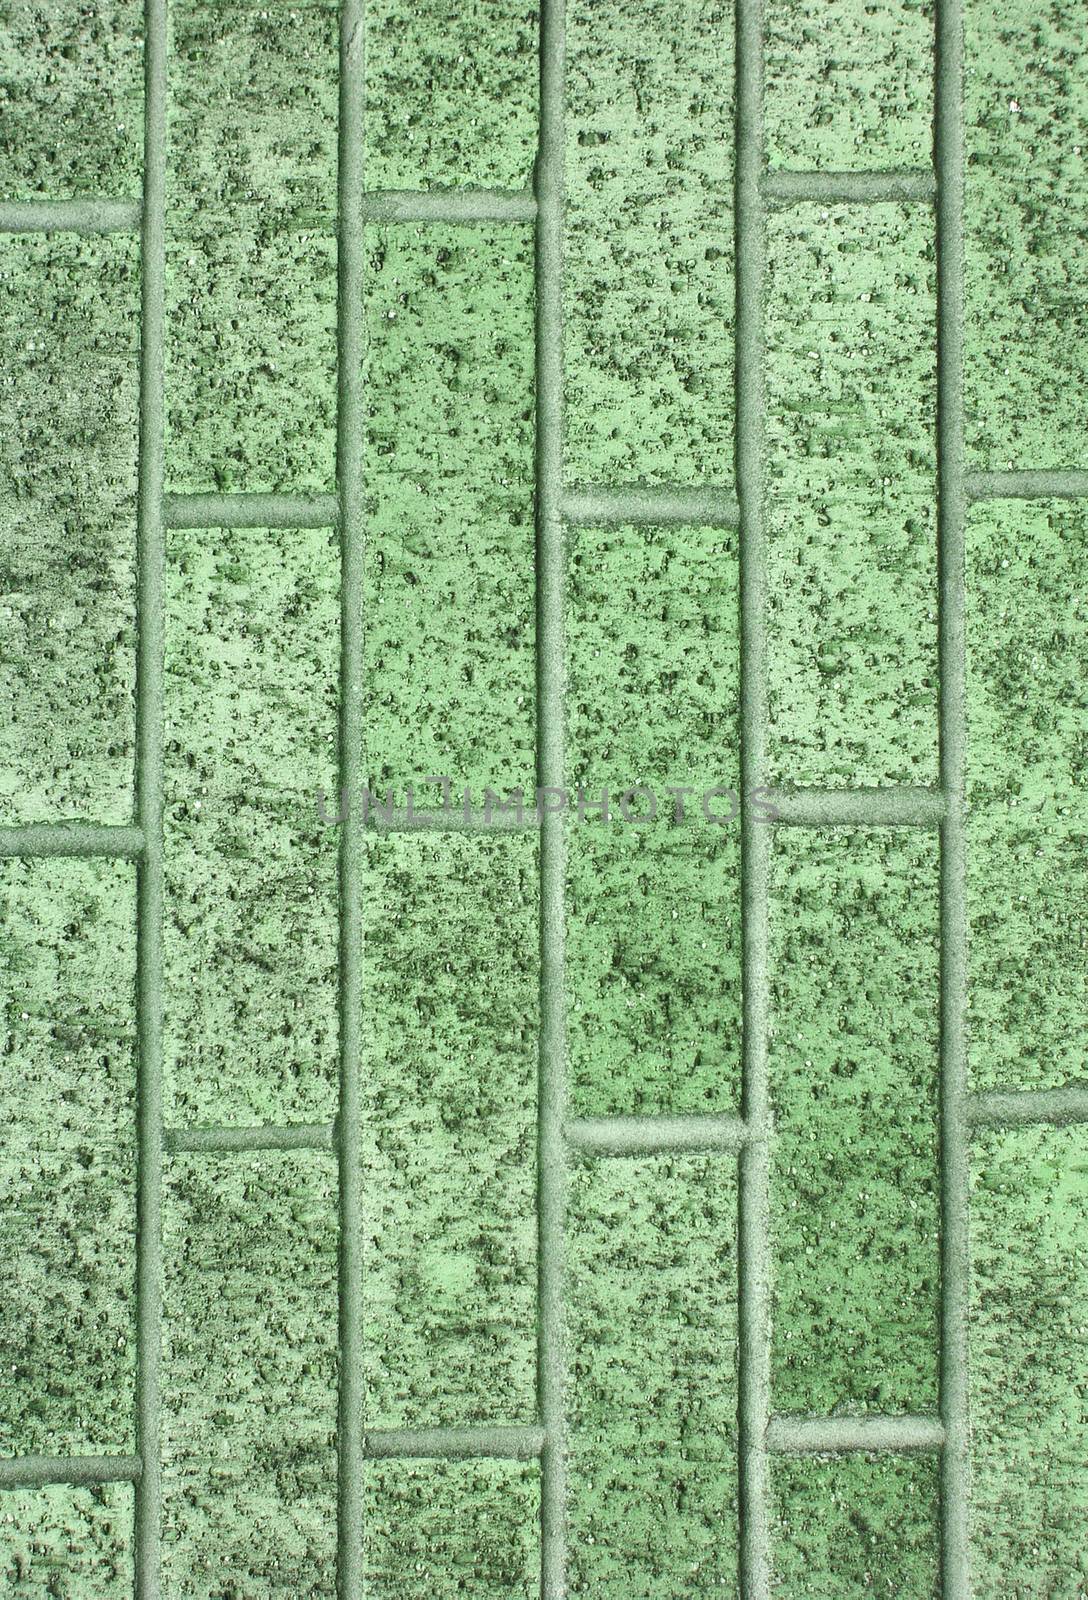 Green brick wall by shutswis